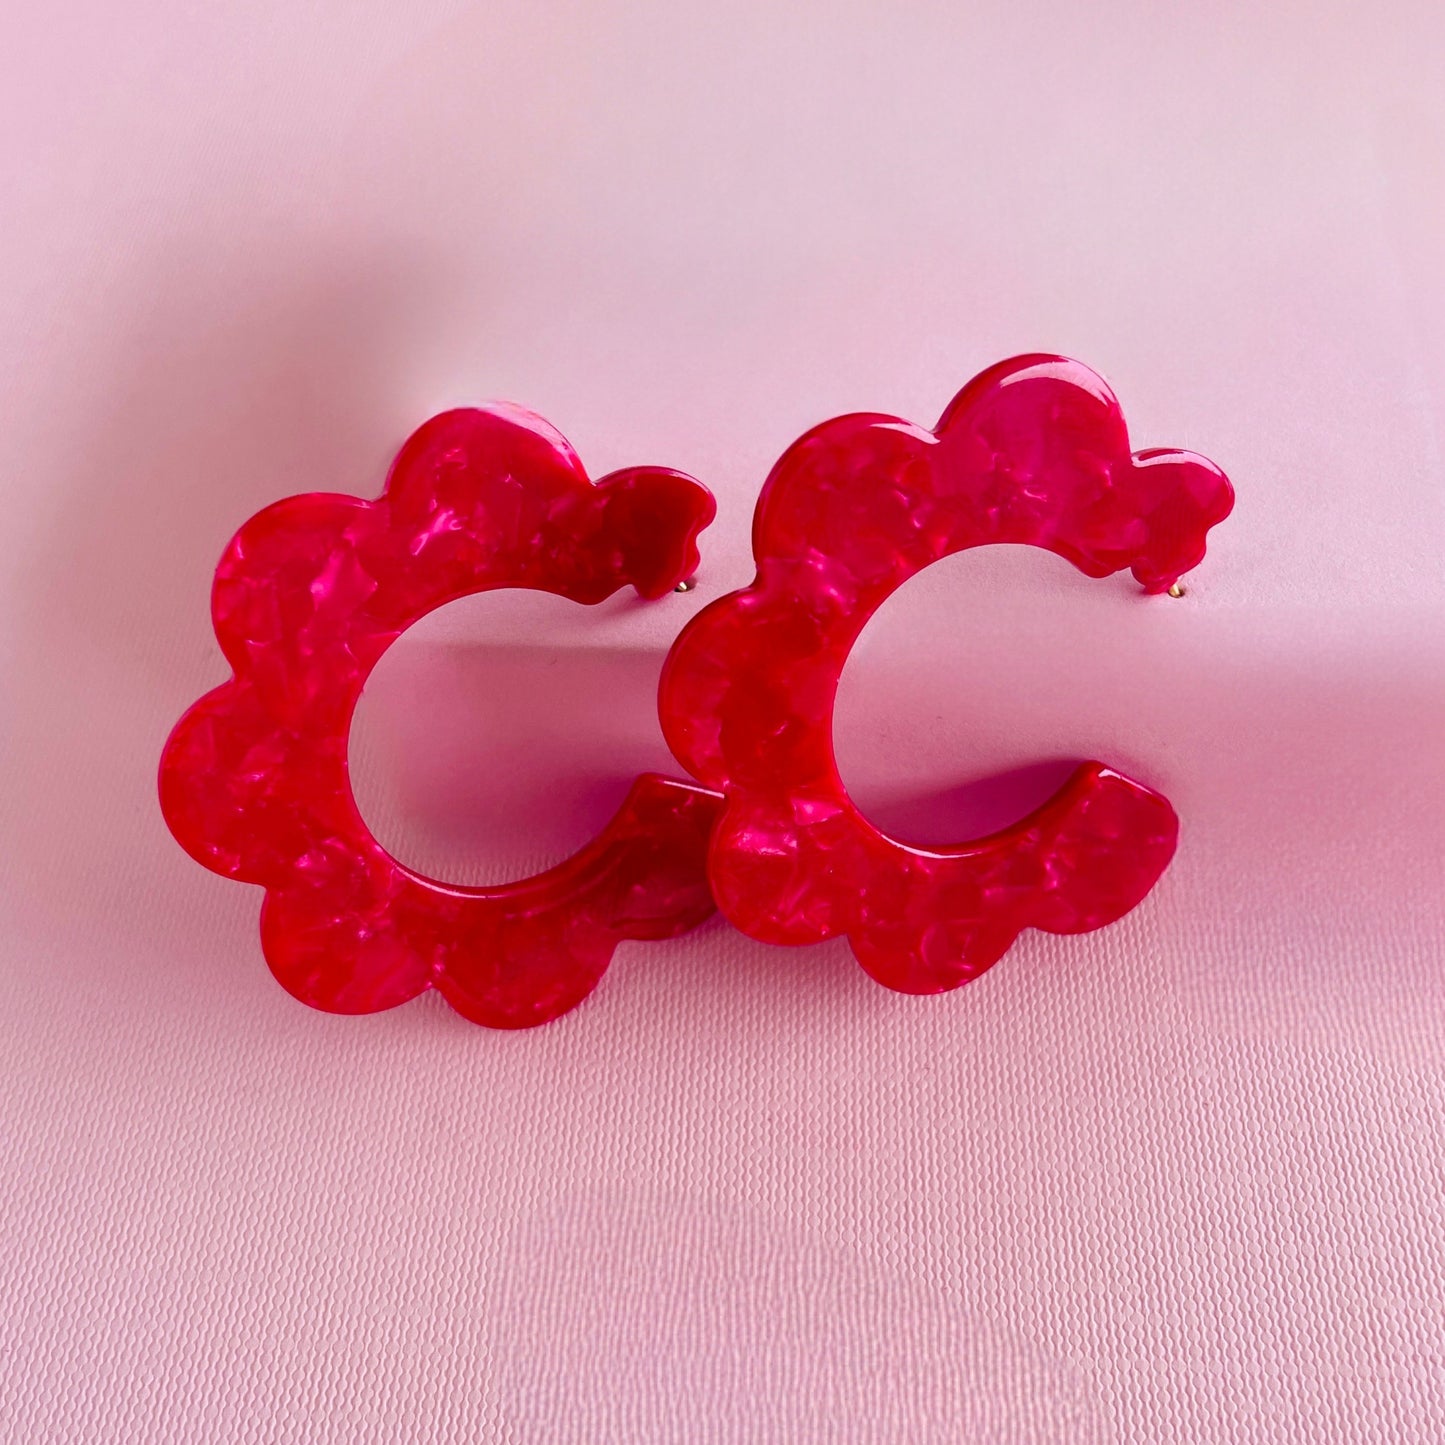 Red Marble Flower Shaped Earrings - Las Ofrendas 